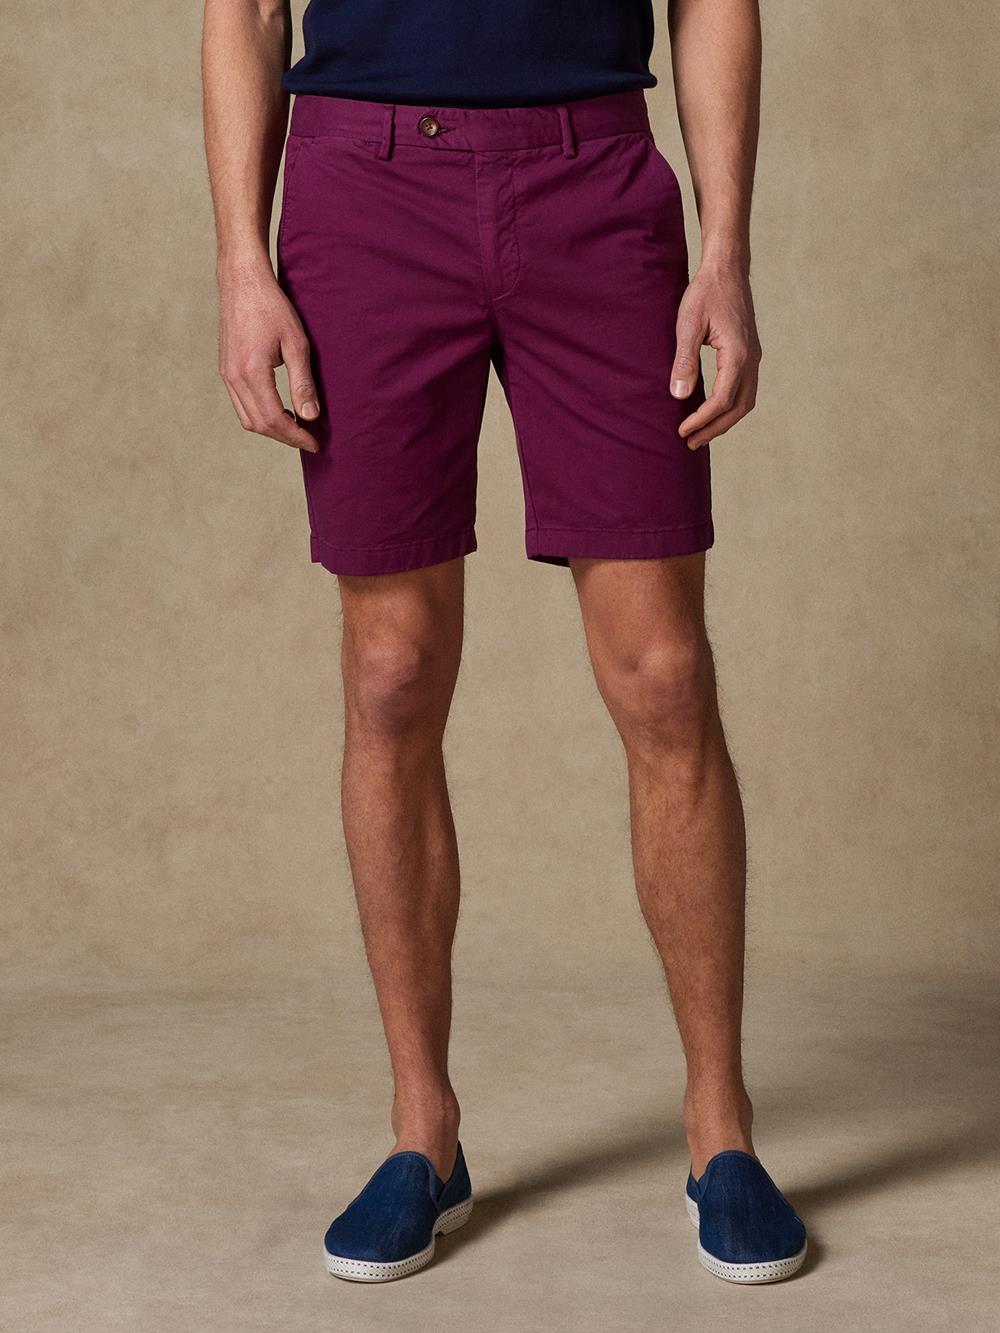 Bermuda-Shorts aus pflaumenfarbener Baumwolle